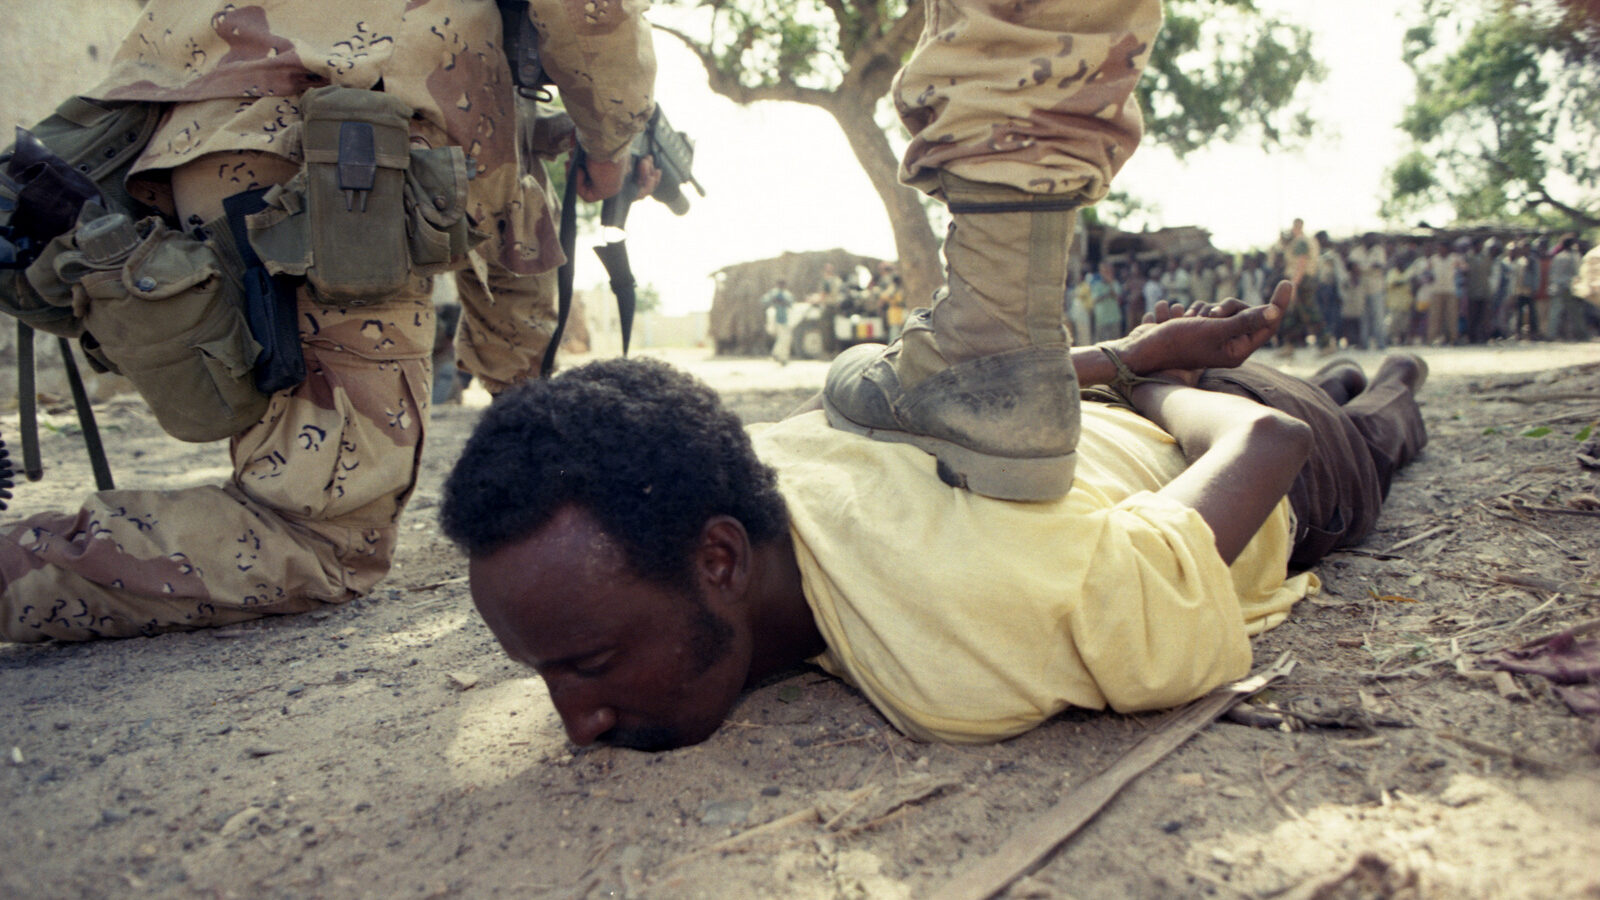 Watch: NATO’s “War On Terror” Leaves Famine, Disease In Its Wake In Africa